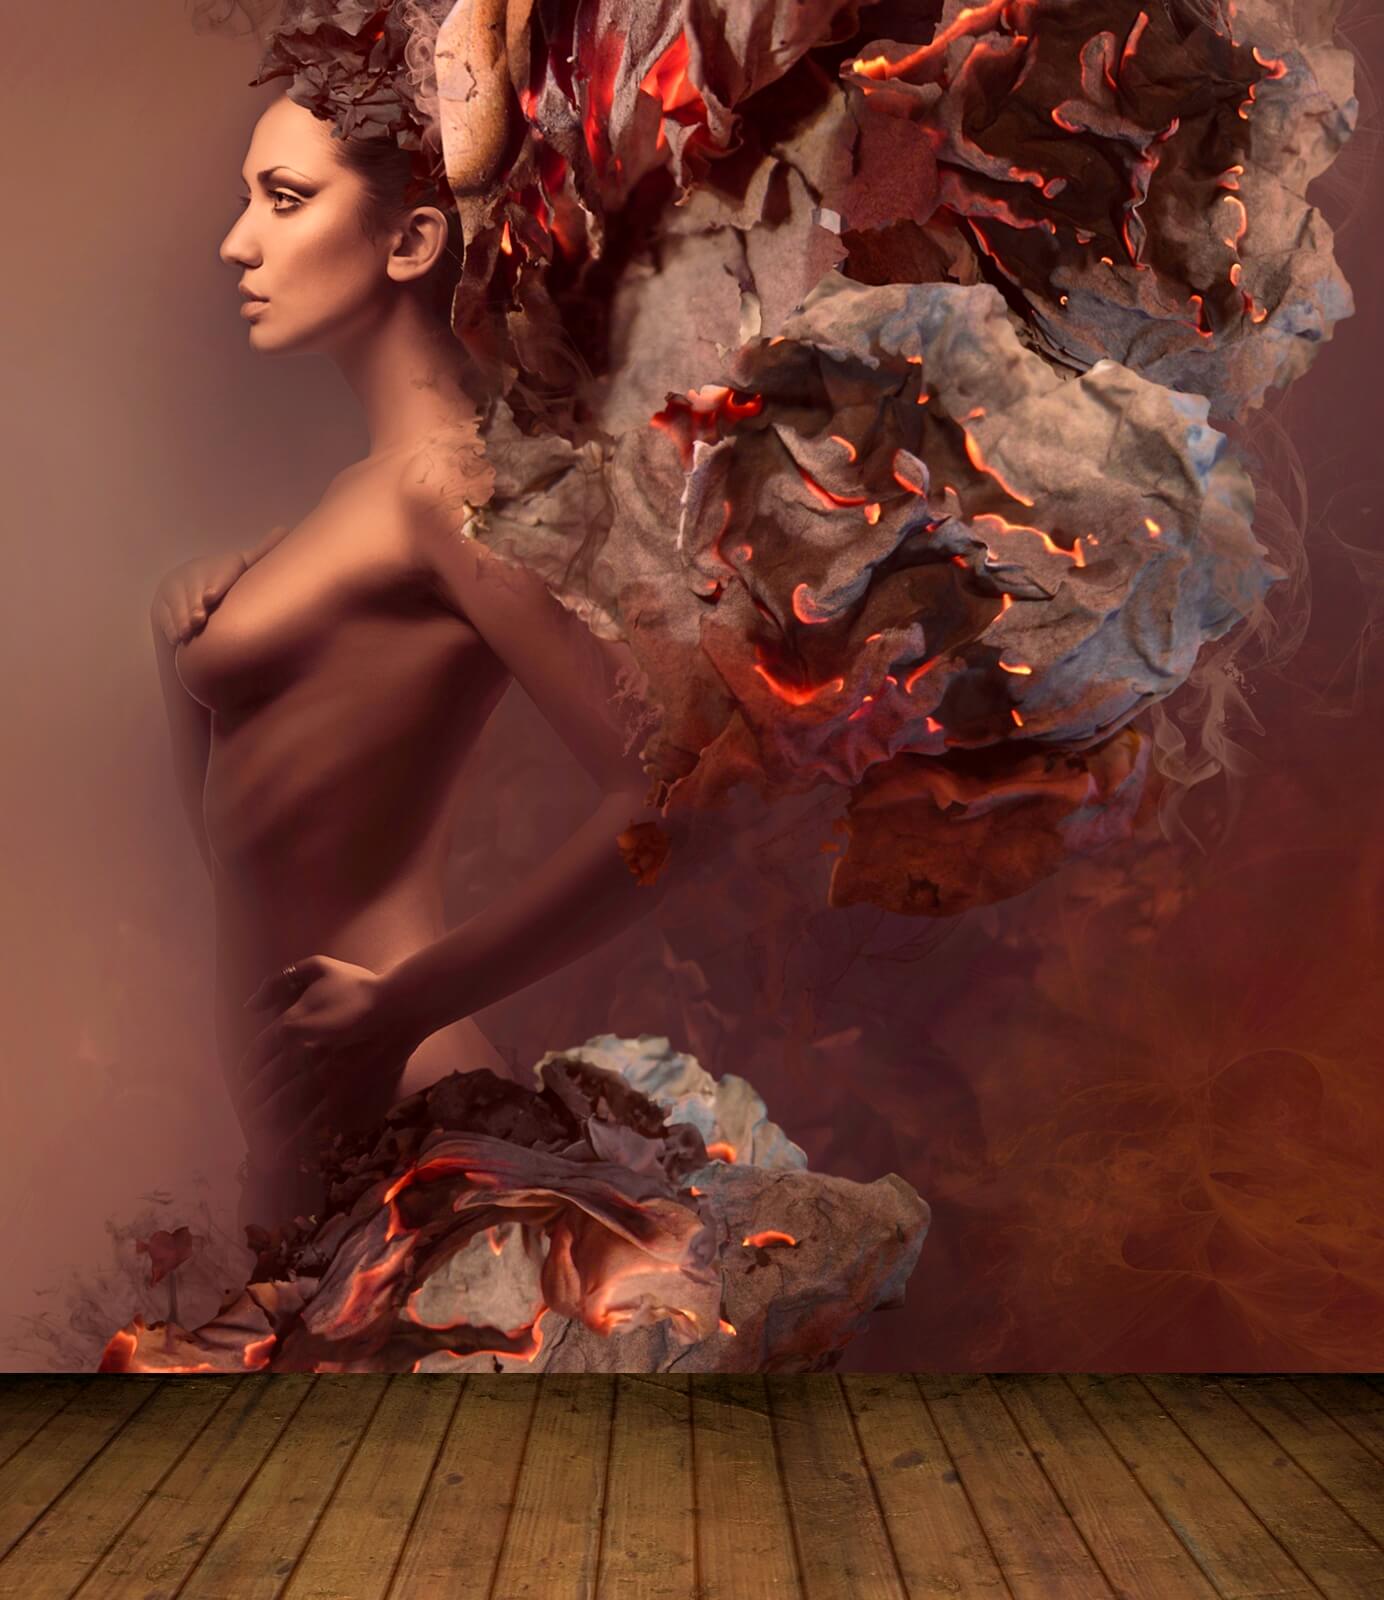 Vlies XXL Poster Fototapete Tapete Flammen Burn Erotik Fire Lady